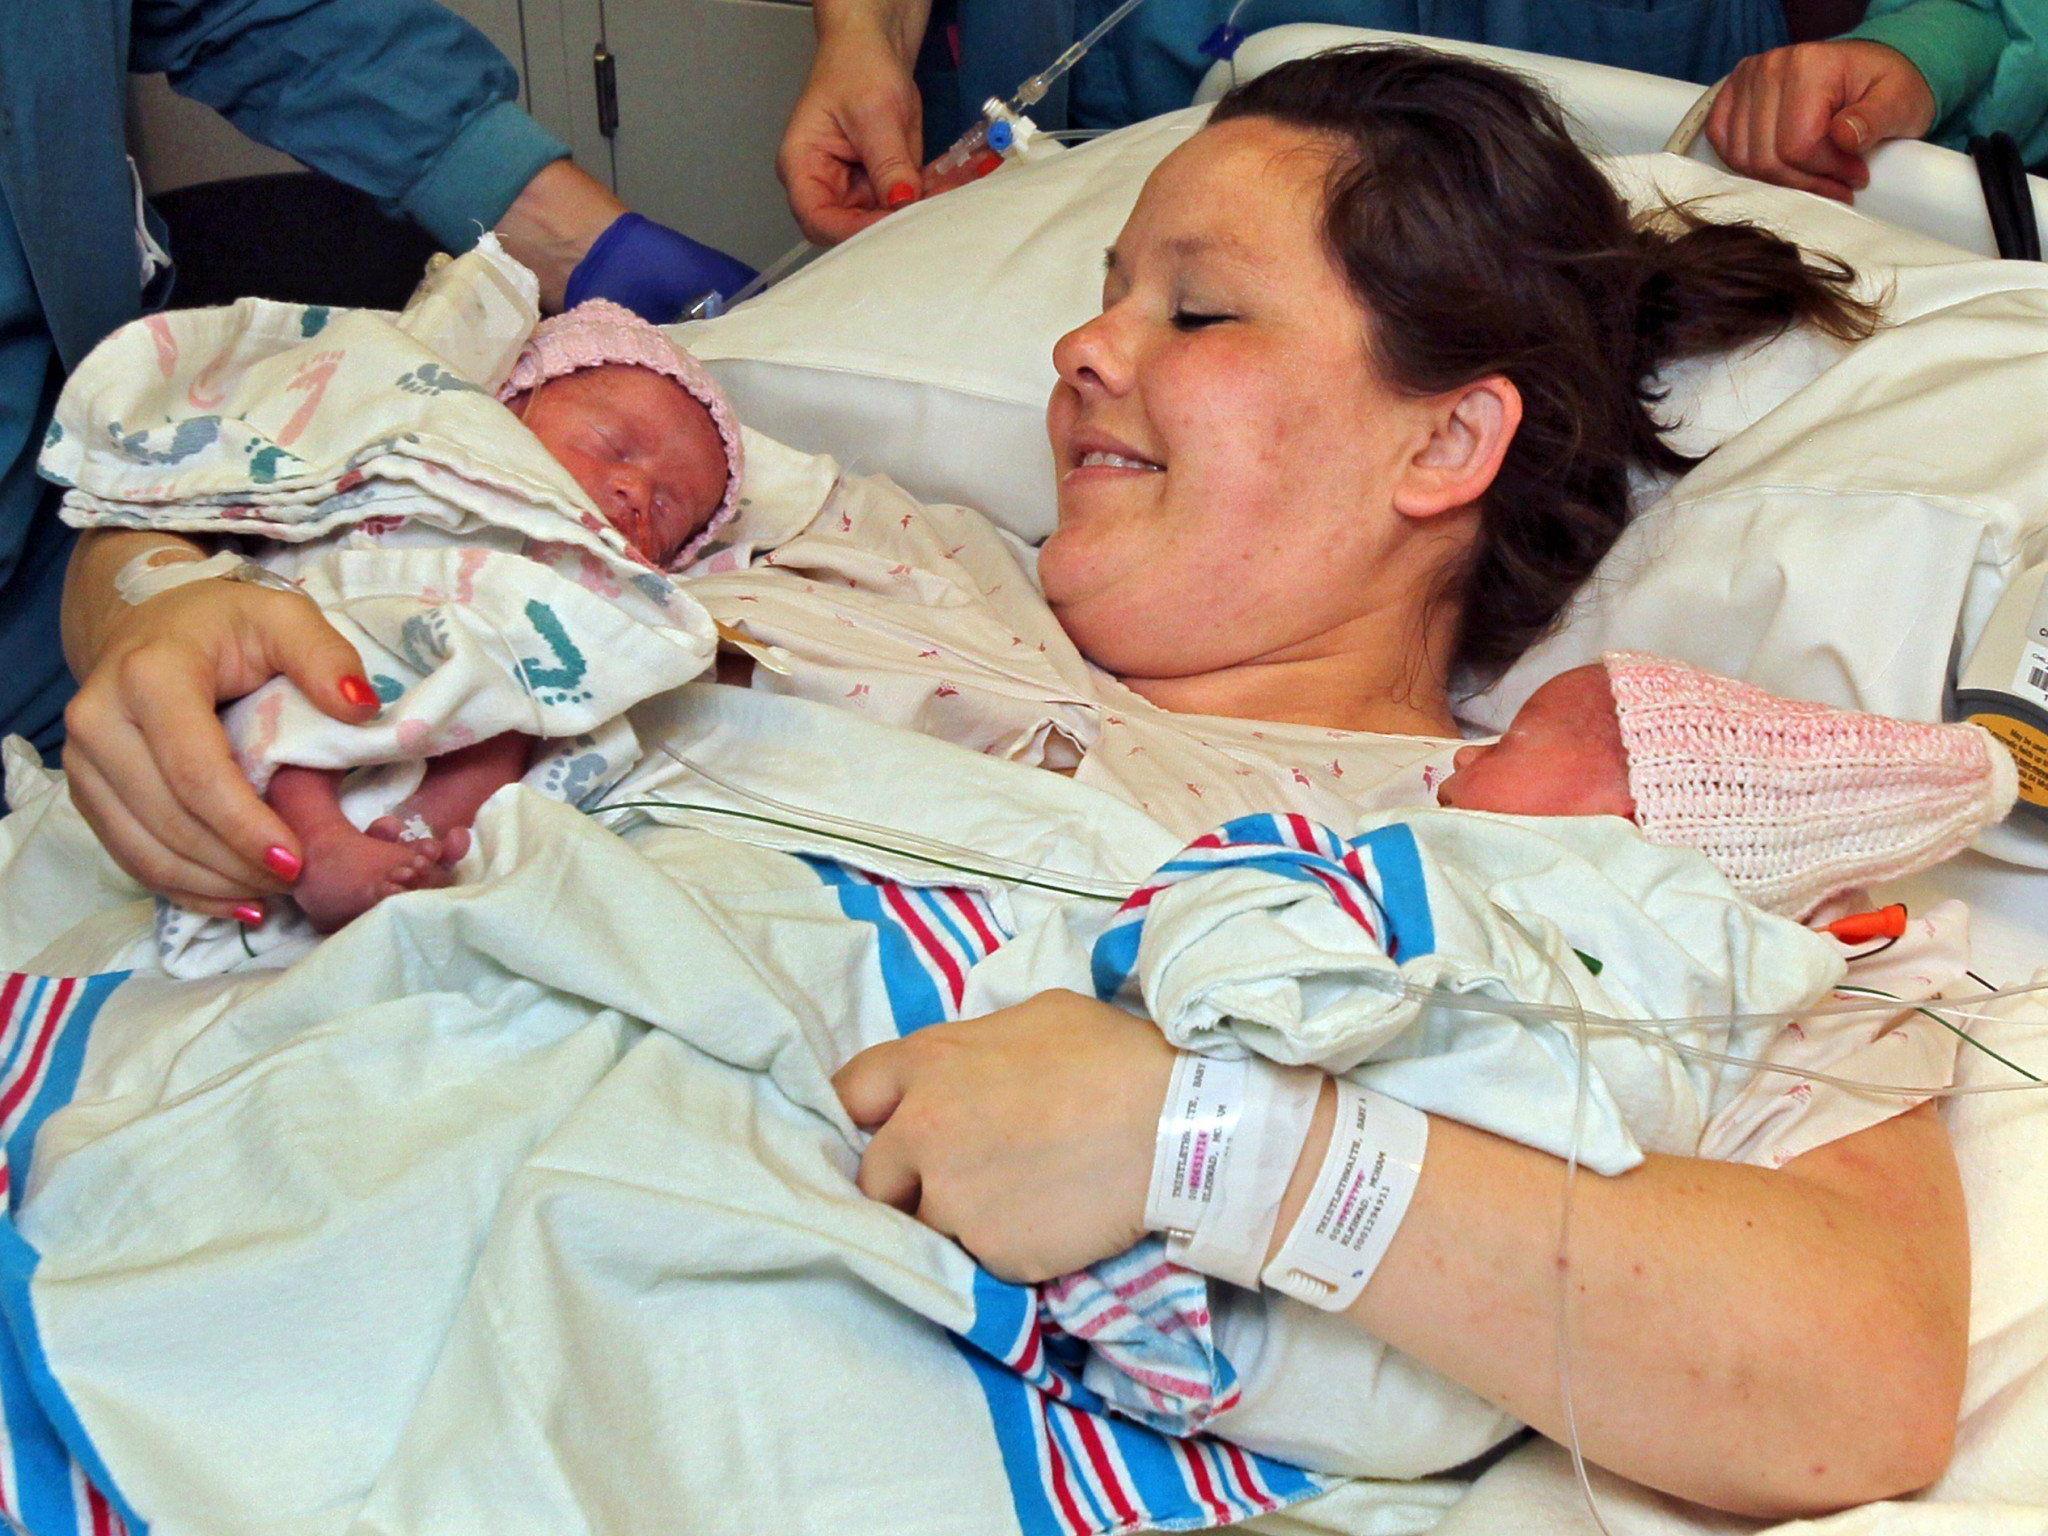 Ganz besondere Verbindung: Zwillingsmädchen hielten bei Geburt Händchen.